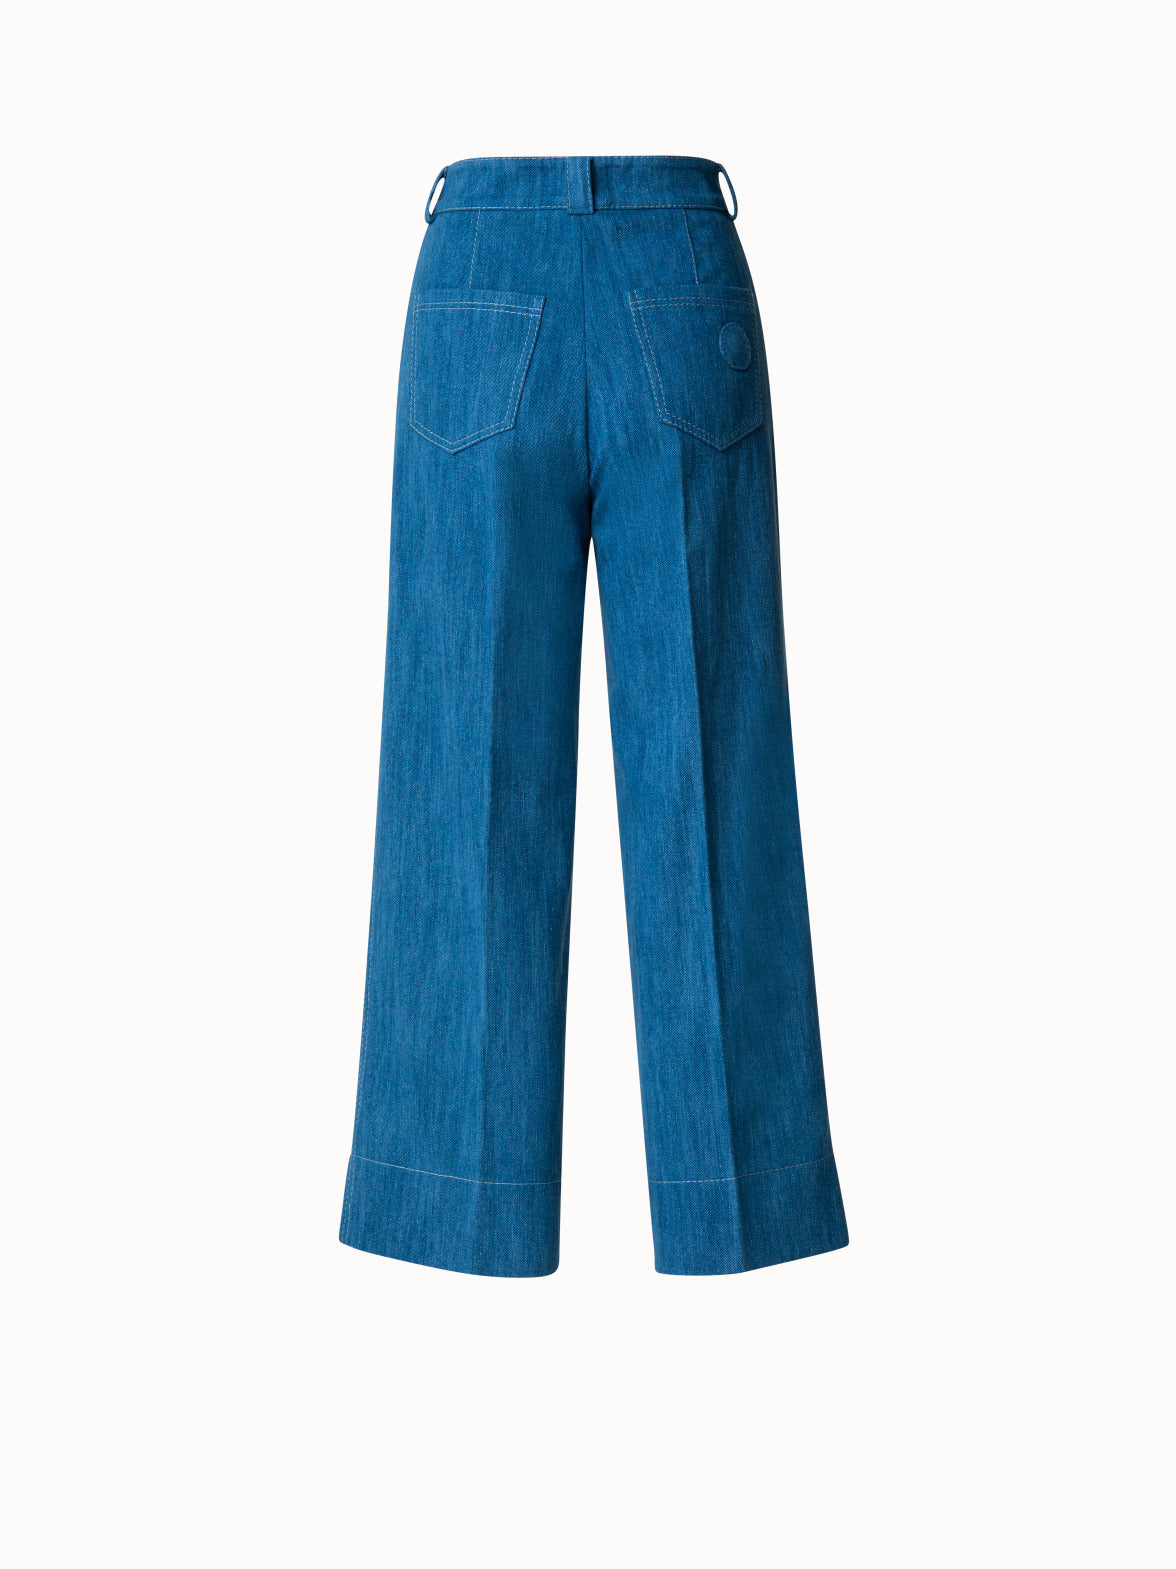 Tibi Light Weight Denim Pleated Cargo Pant (Jeans,Wide Leg) IFCHIC.COM